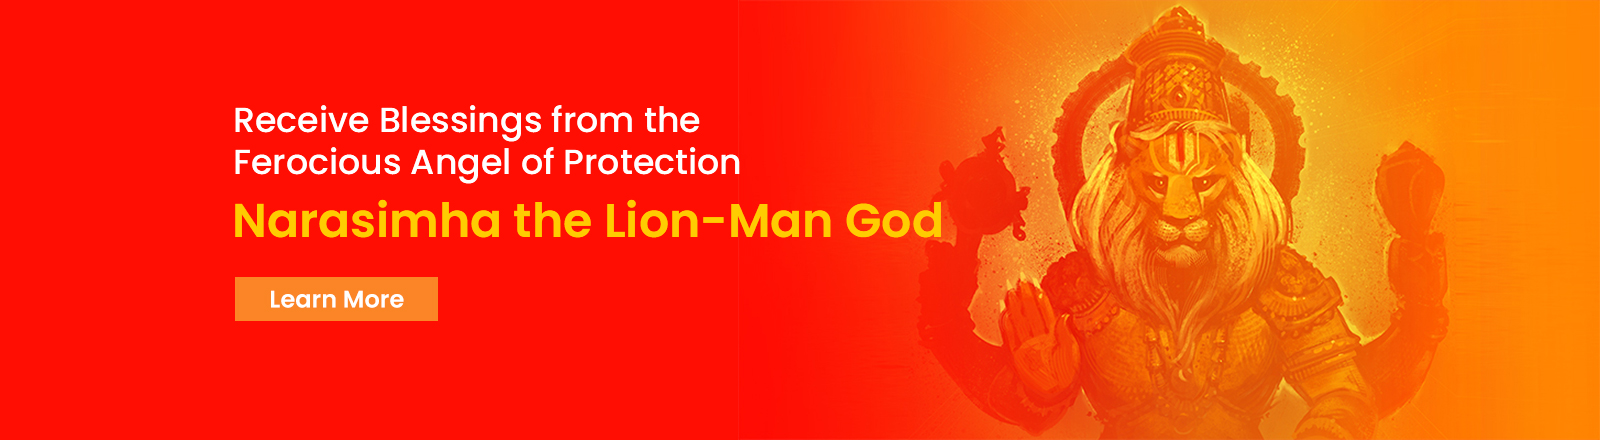 Narasimha the Lion-Man God